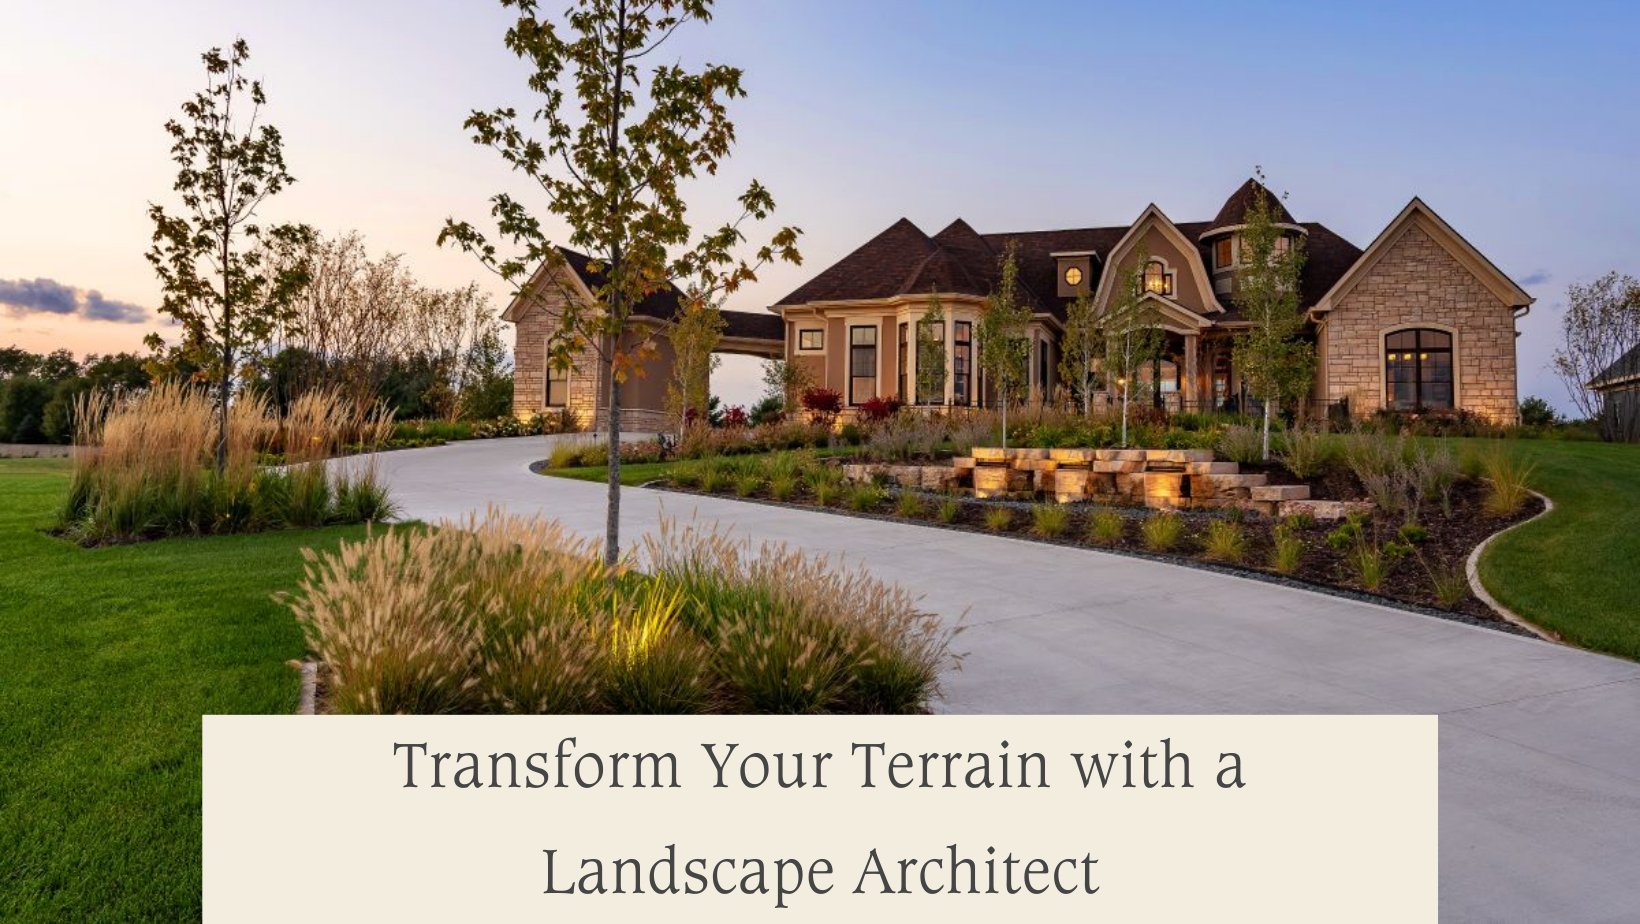 Transform Your Terrain with a Landscape Architect